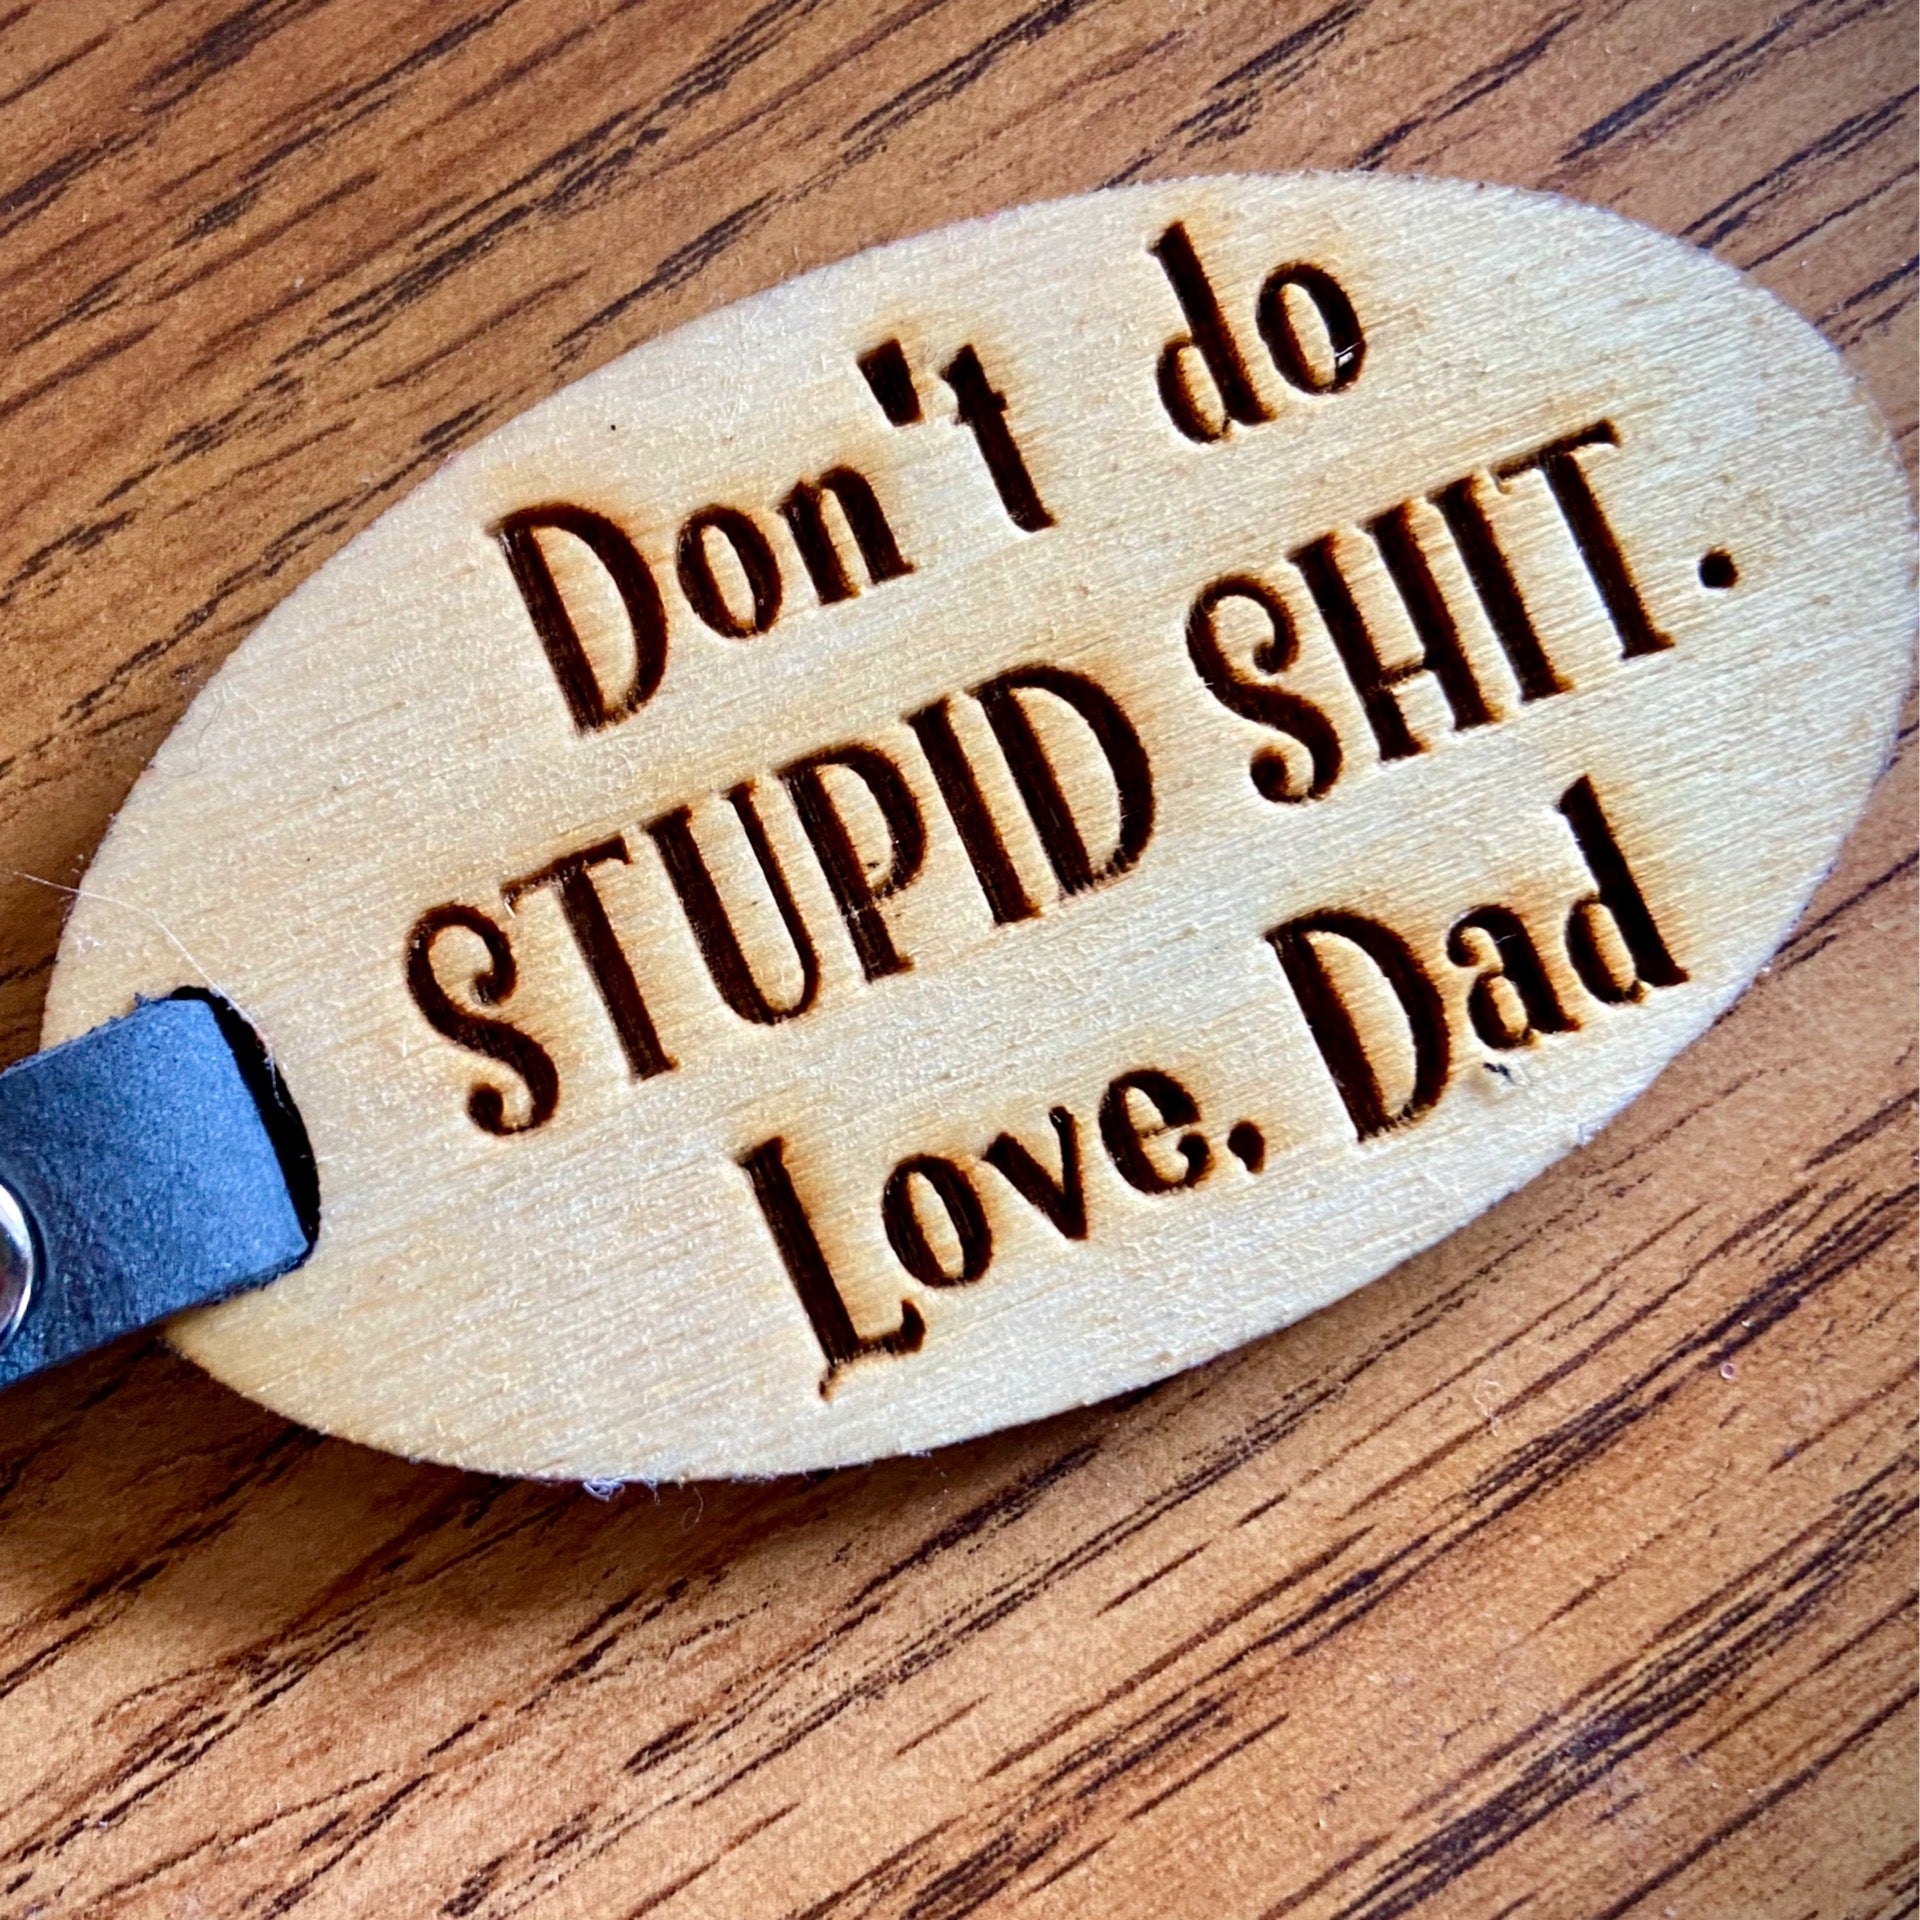 Don't do stupid shit. Love, Mom (or Dad, Auntie, Grandma, etc